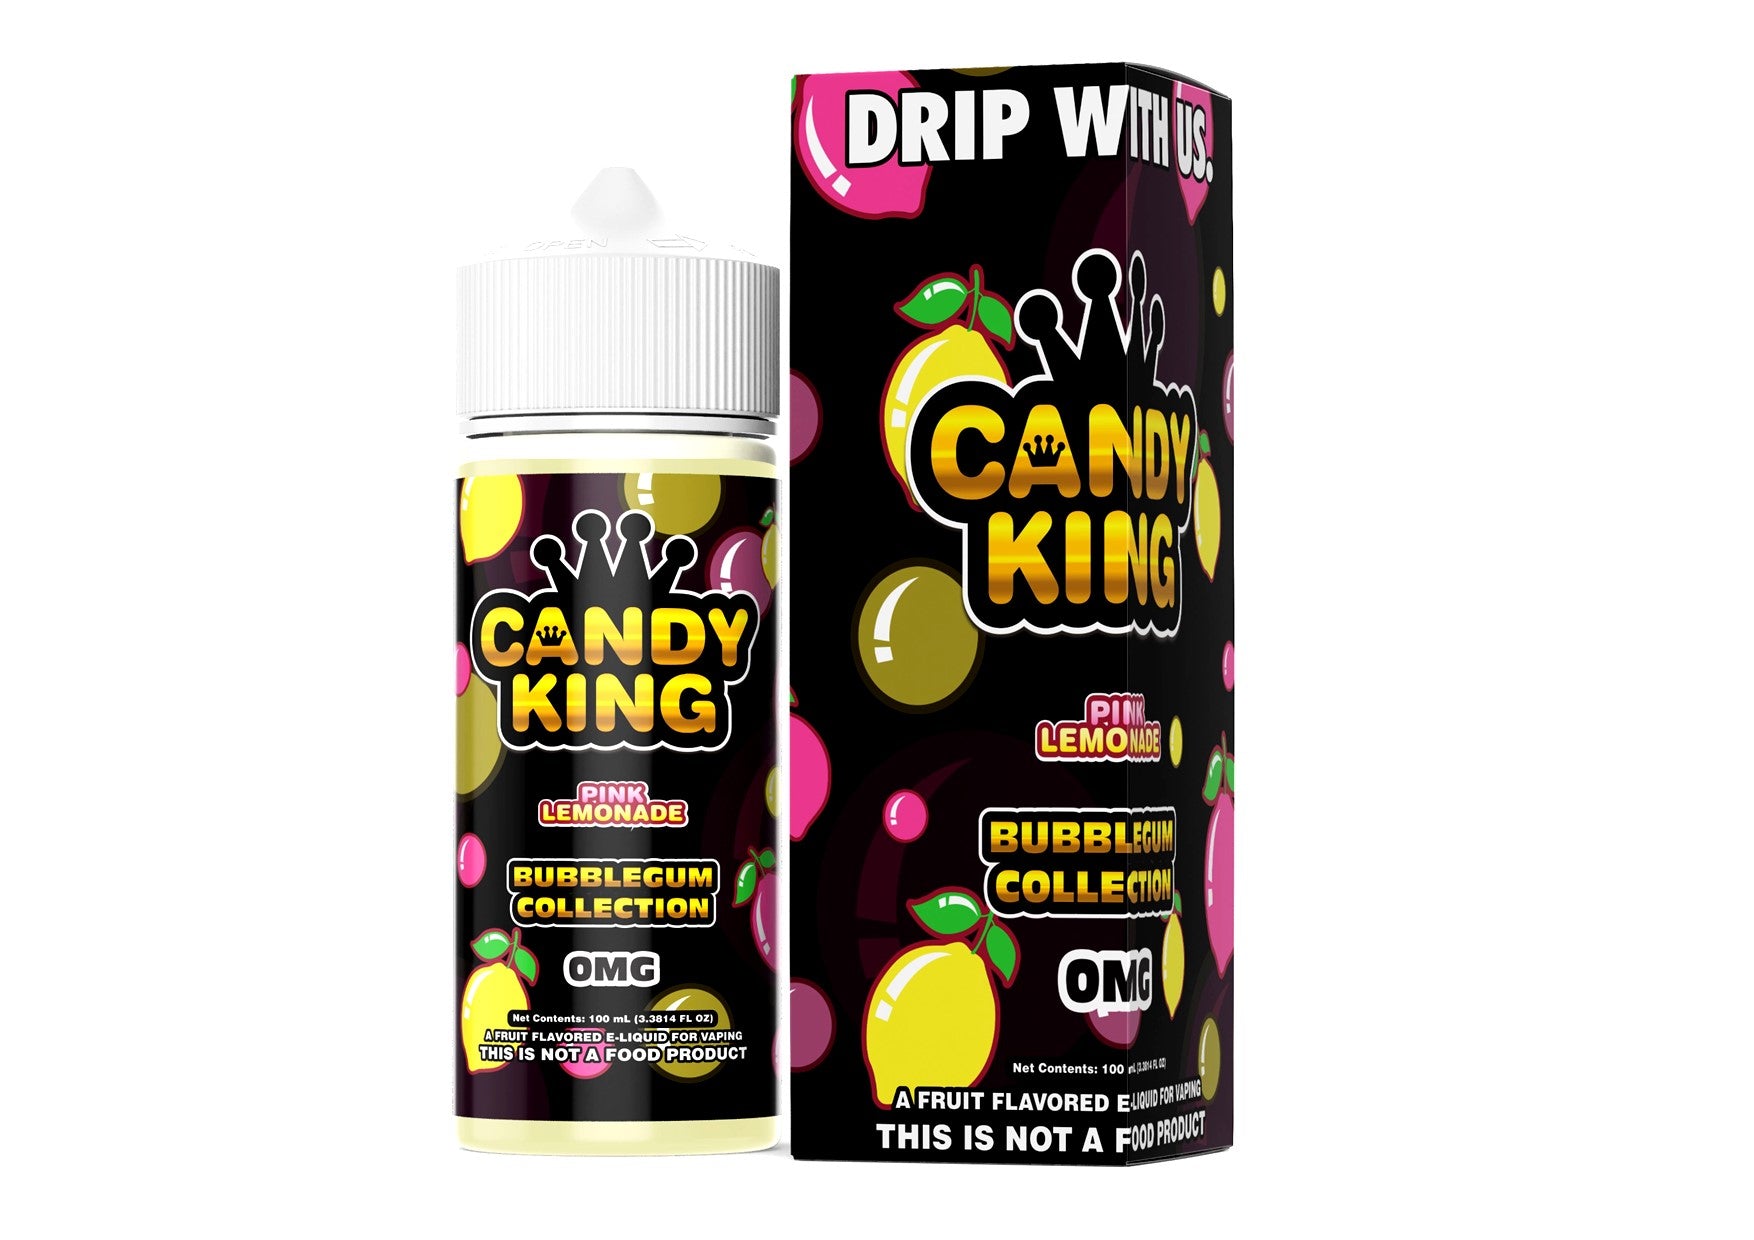 Candy King | Bubblegum Collection | Pink Lemonade